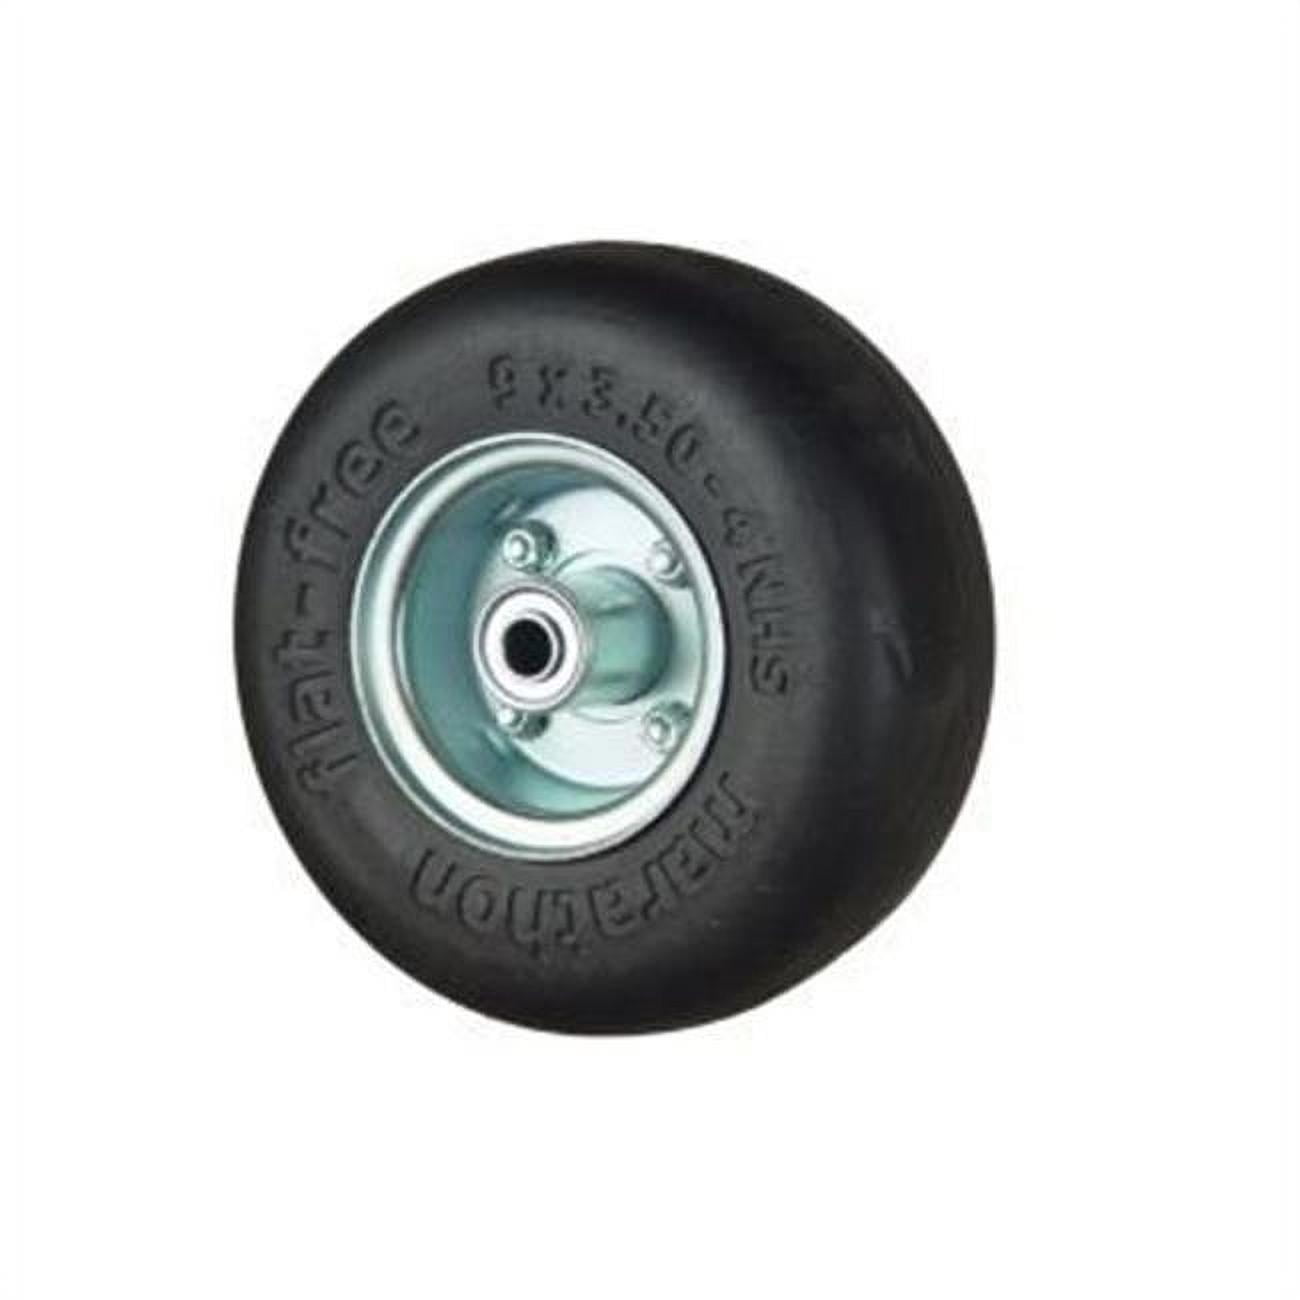 9x3.50-4 Flat Free Tire on Wheel 